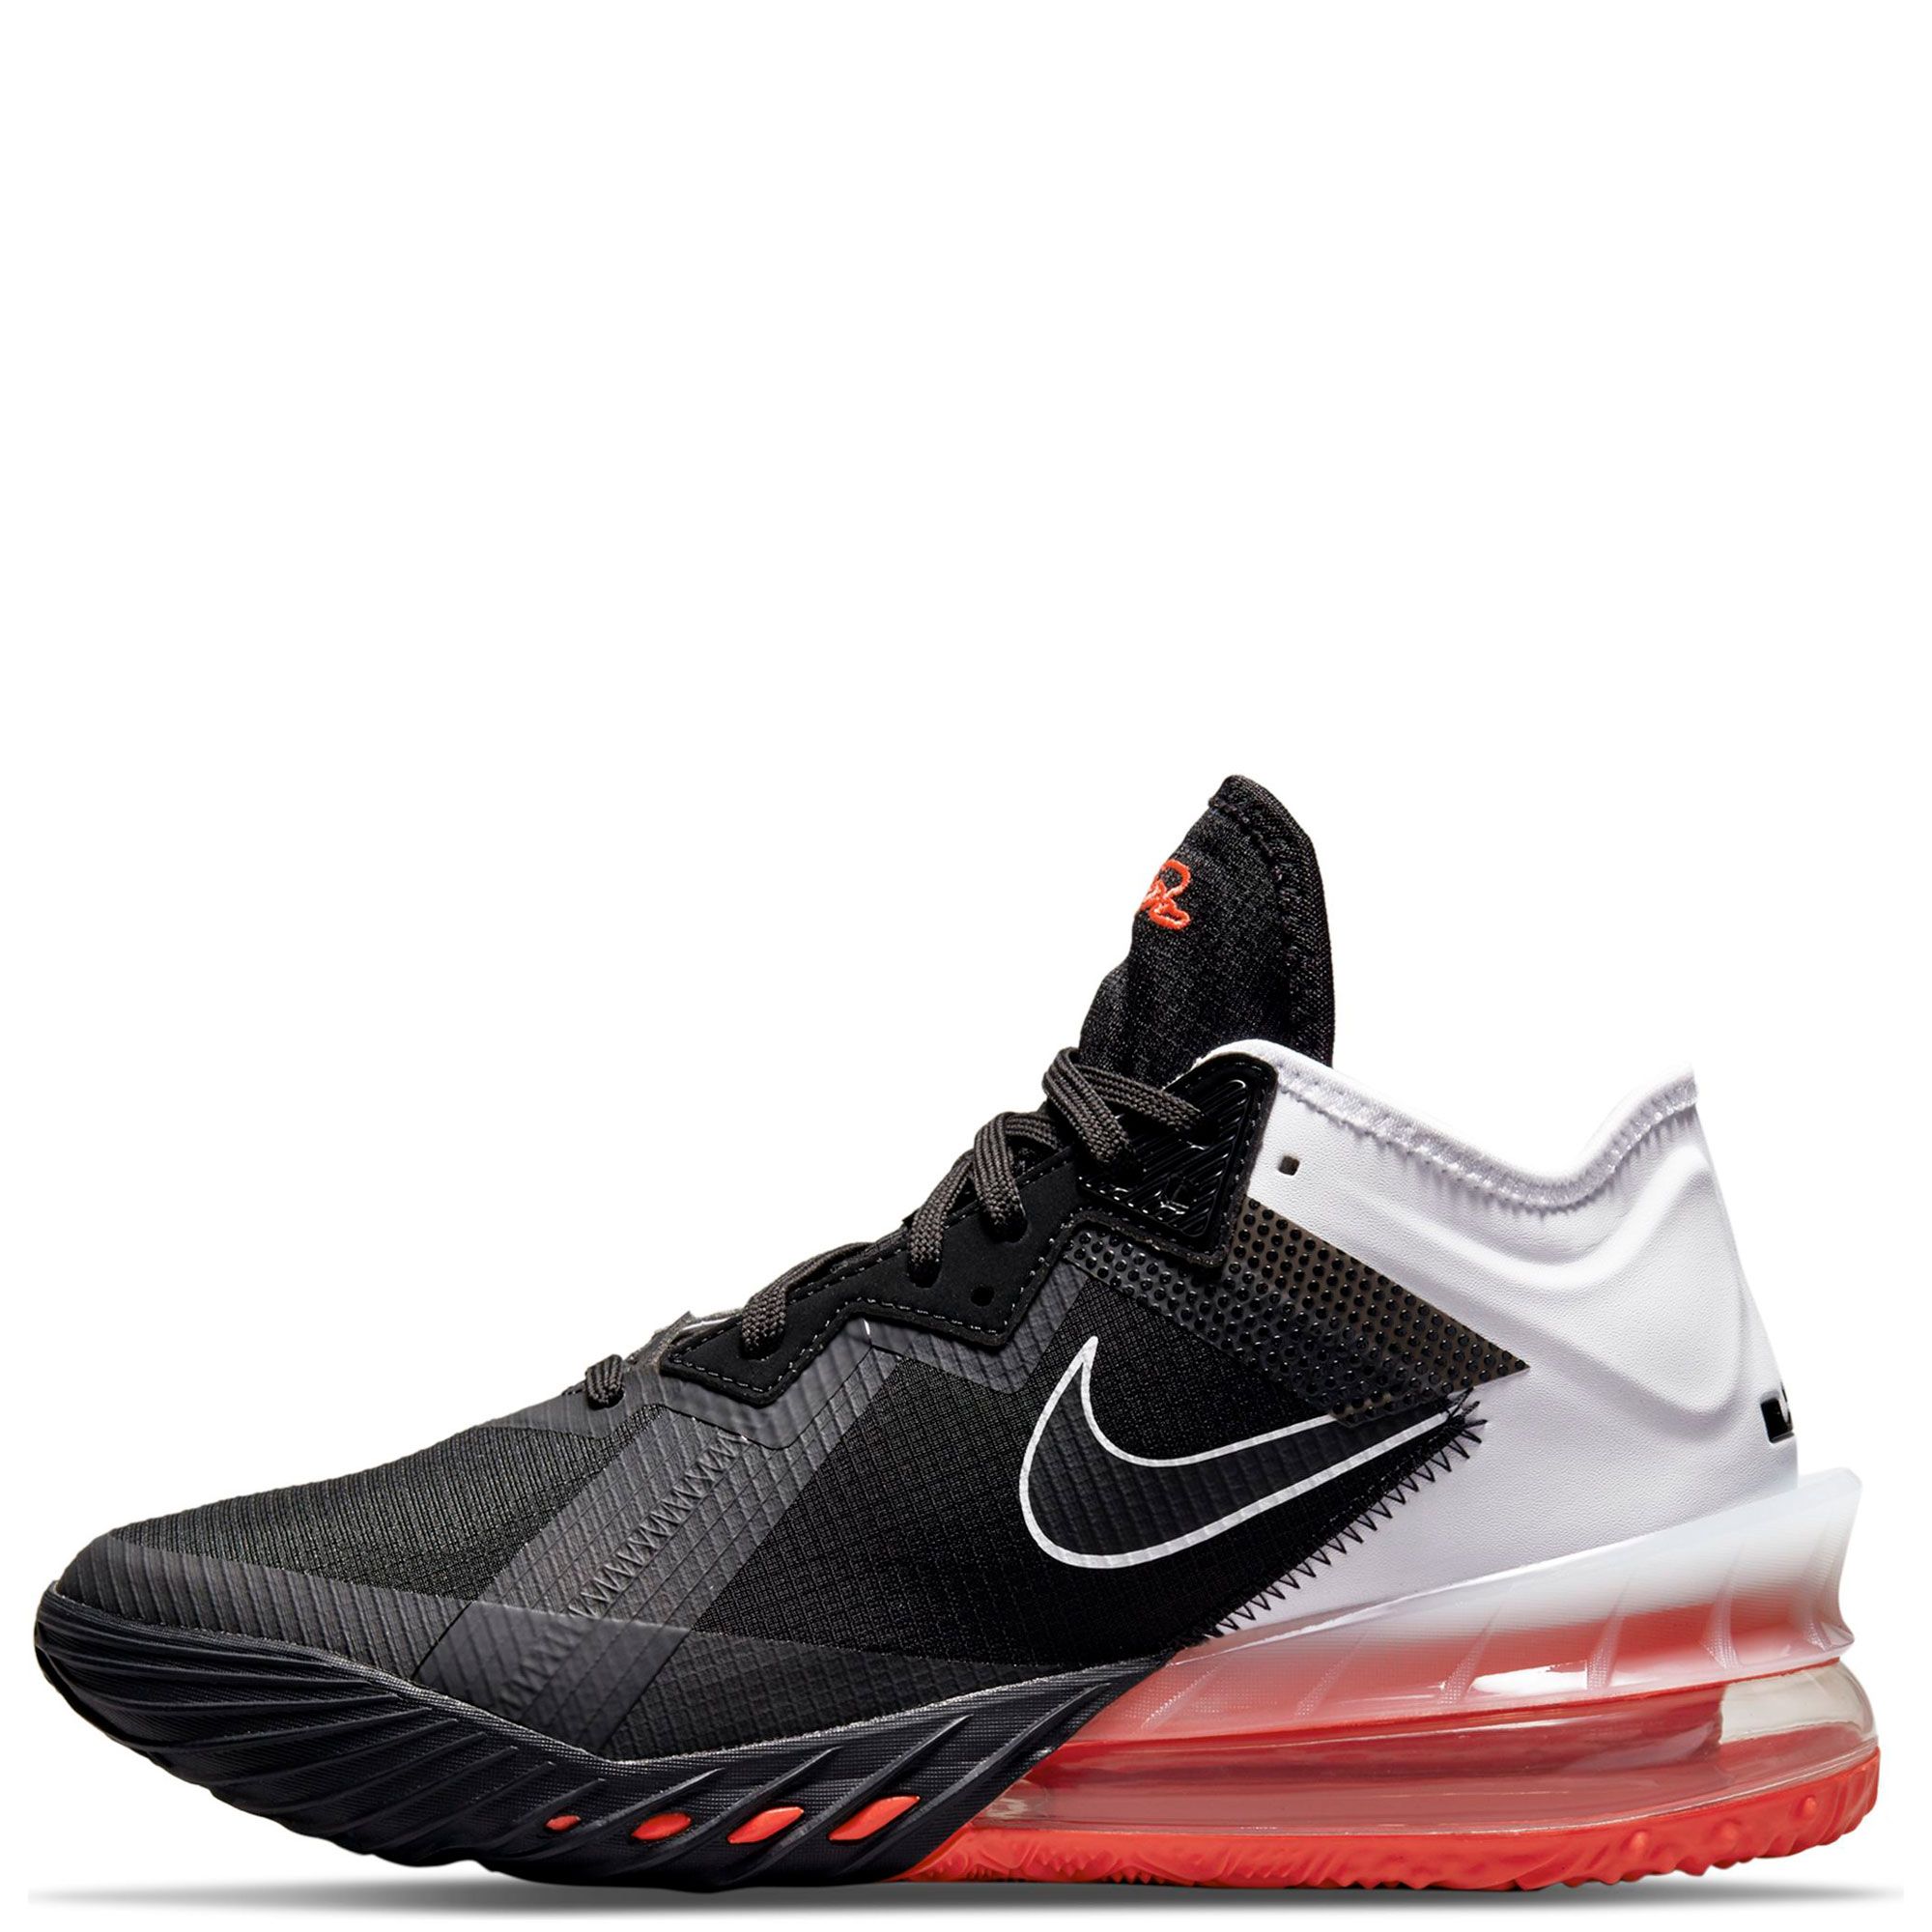 Nike LeBron Witness 5 Basketball Shoes, Black/Bright Crimson/University Red, 14